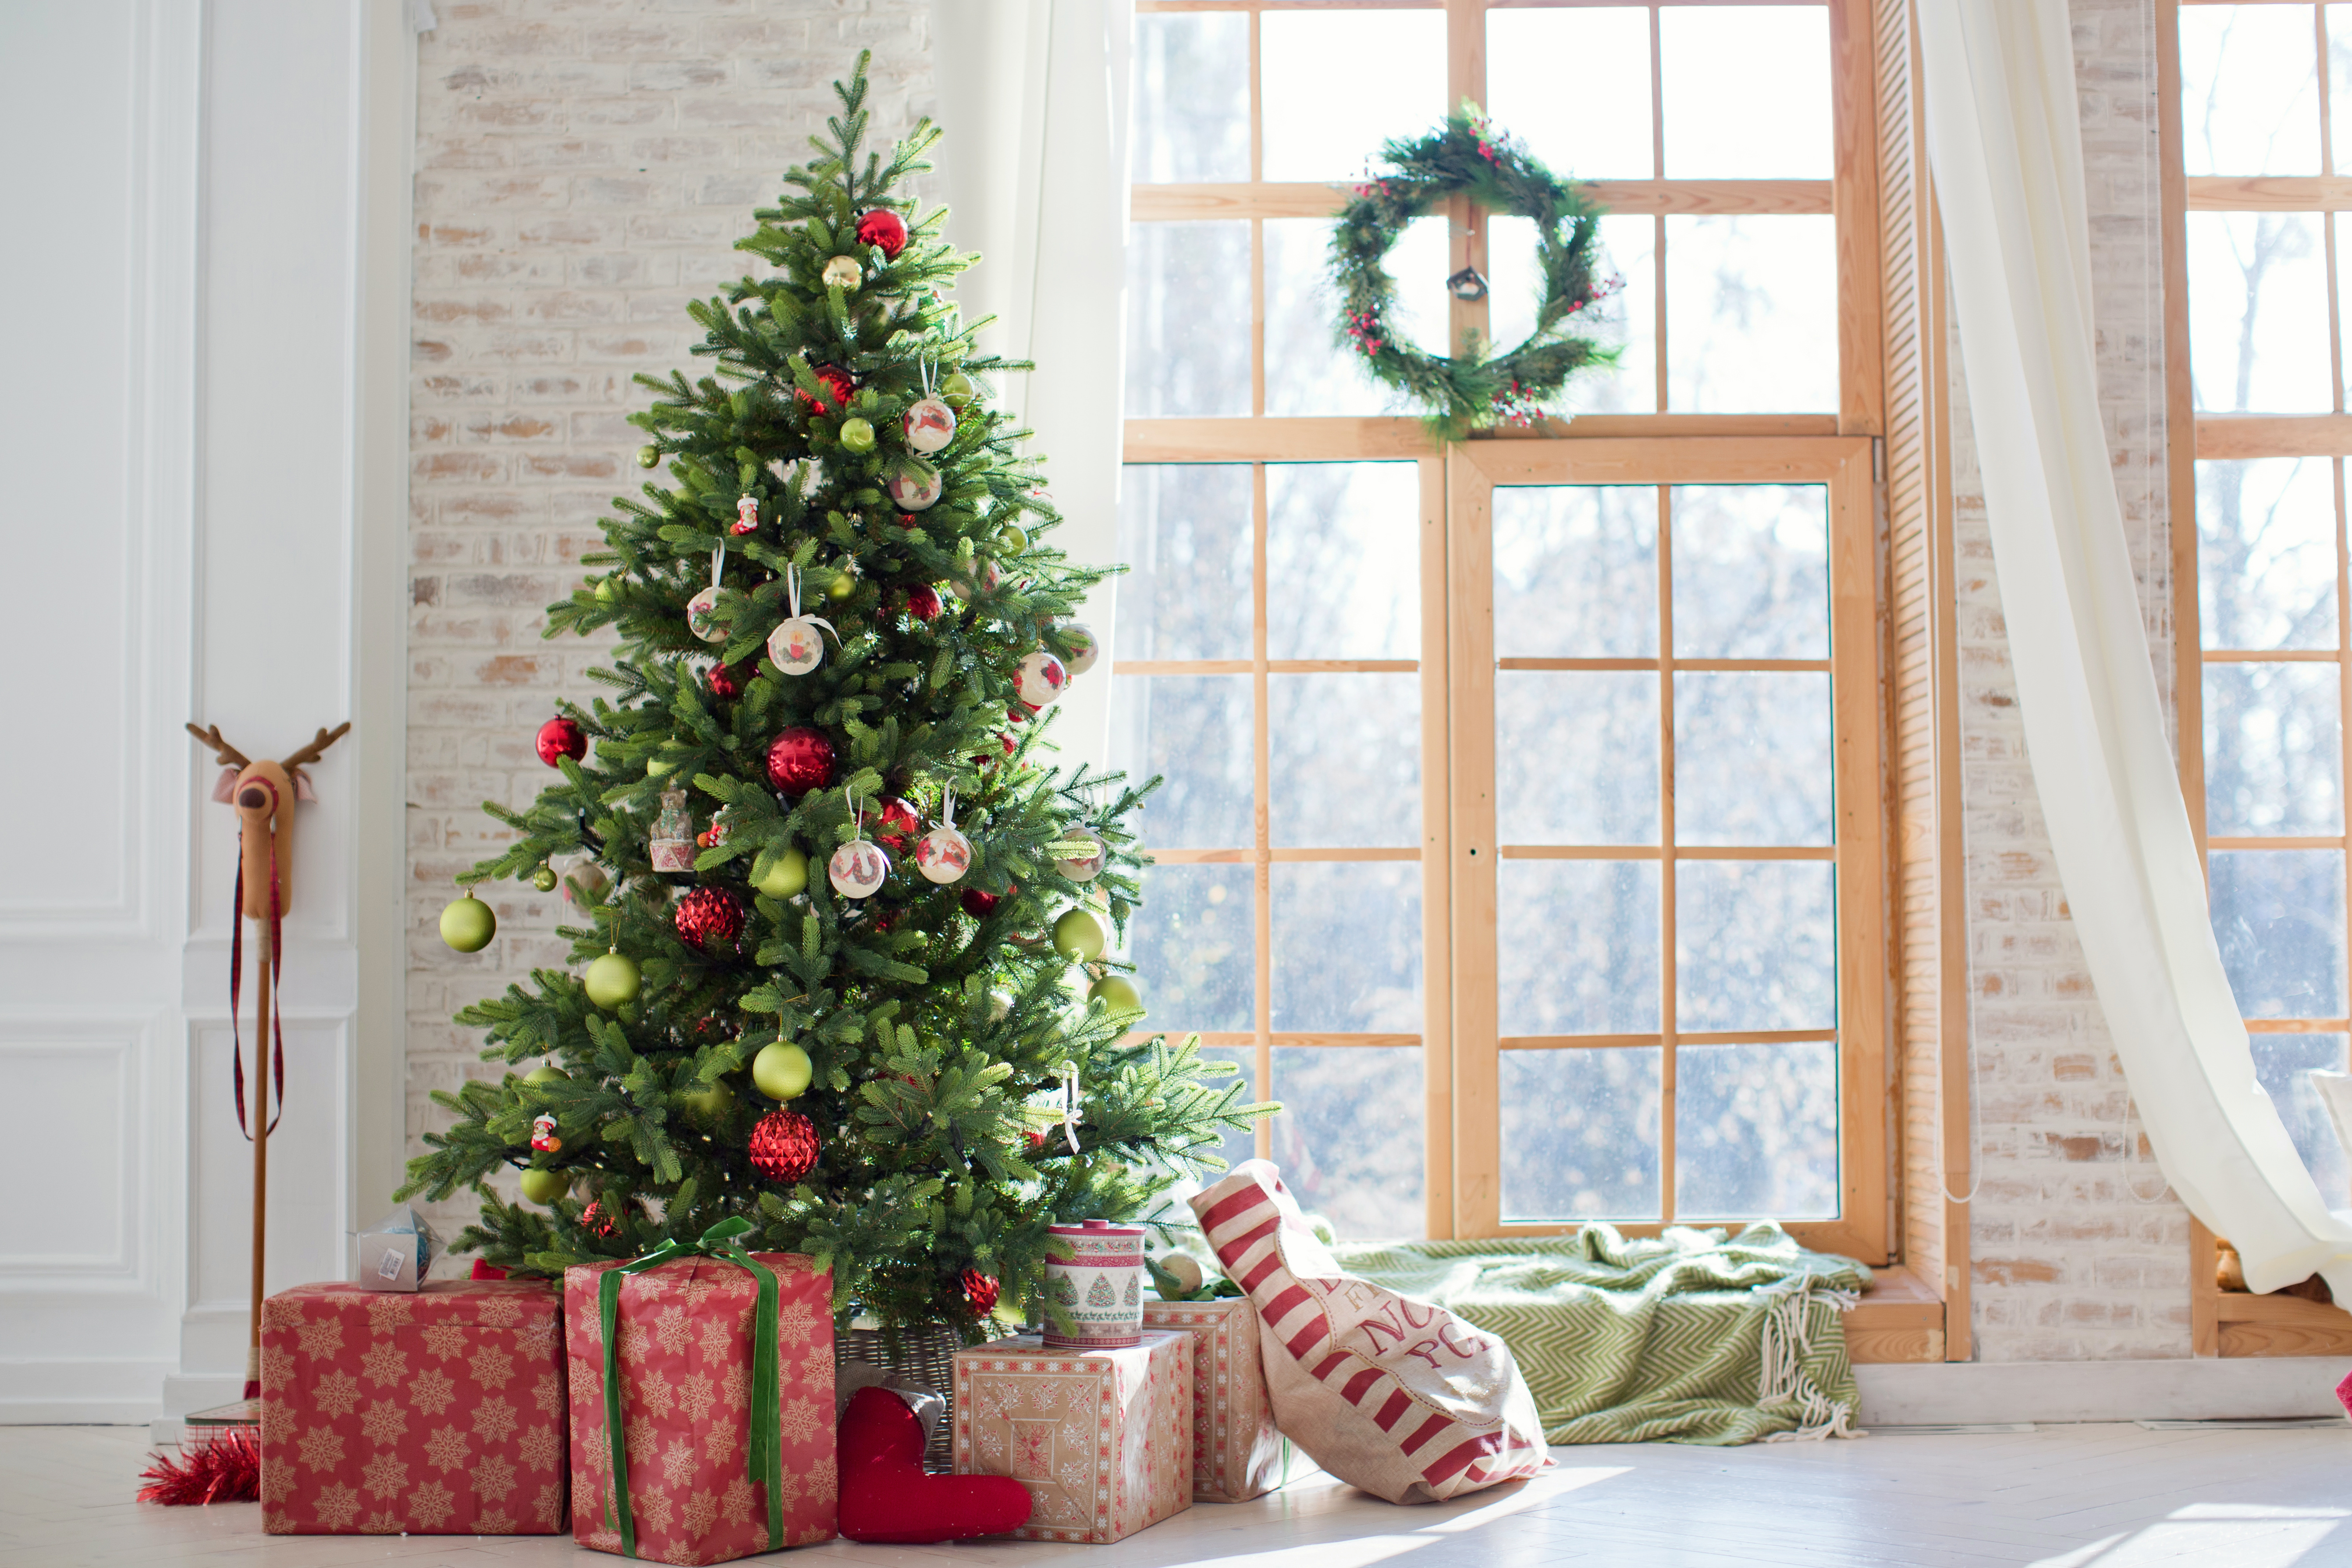 Chose your pine Christmas tree carefully